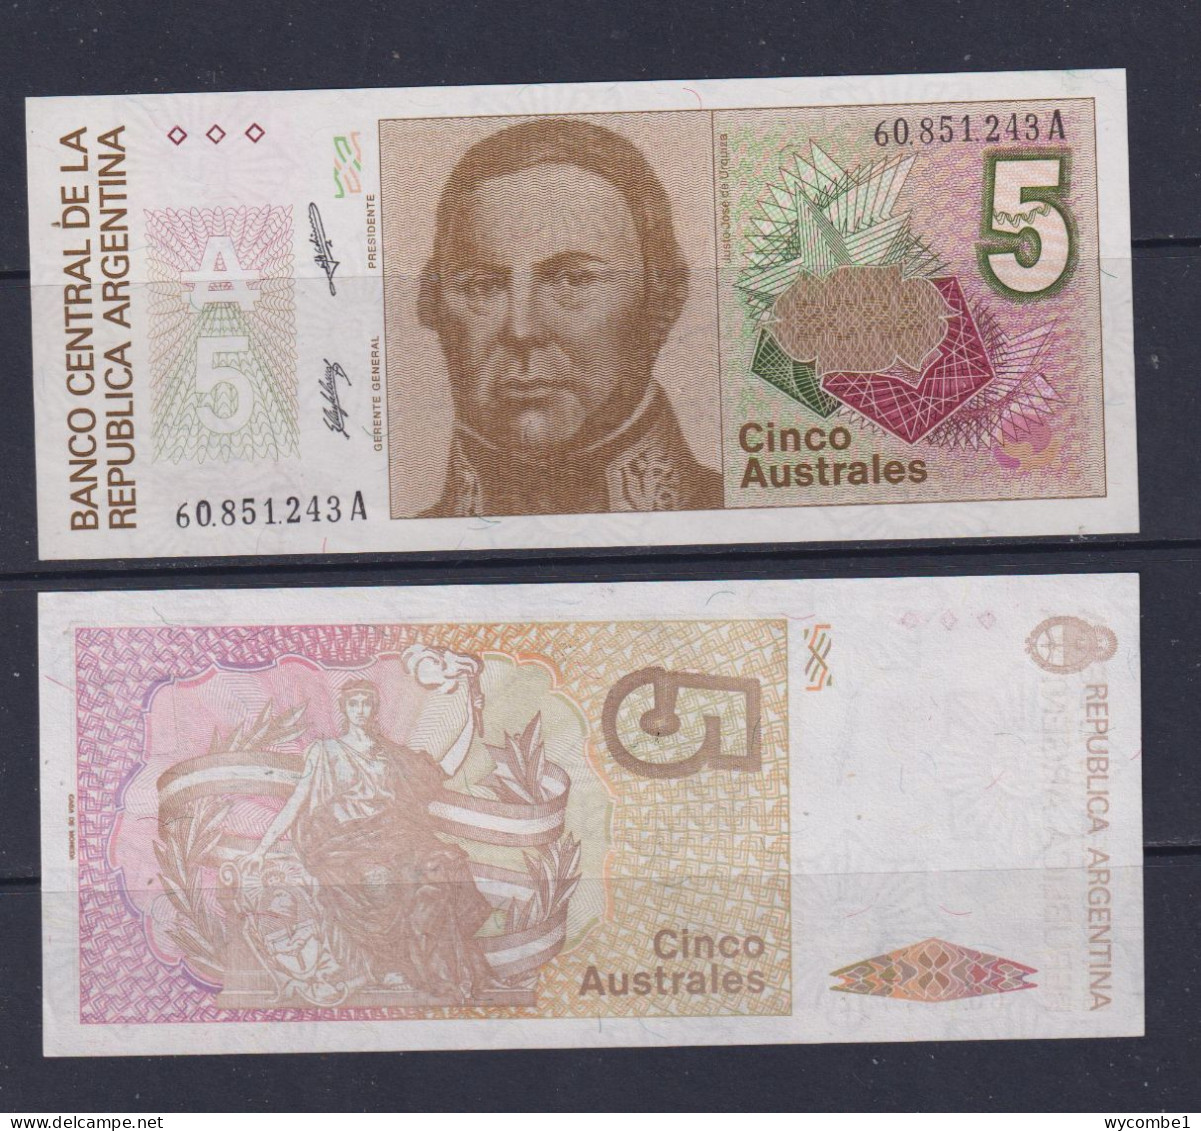 ARGENTINA  -  1985-89 5 Australes  UNC/aUNC  Banknote - Argentina